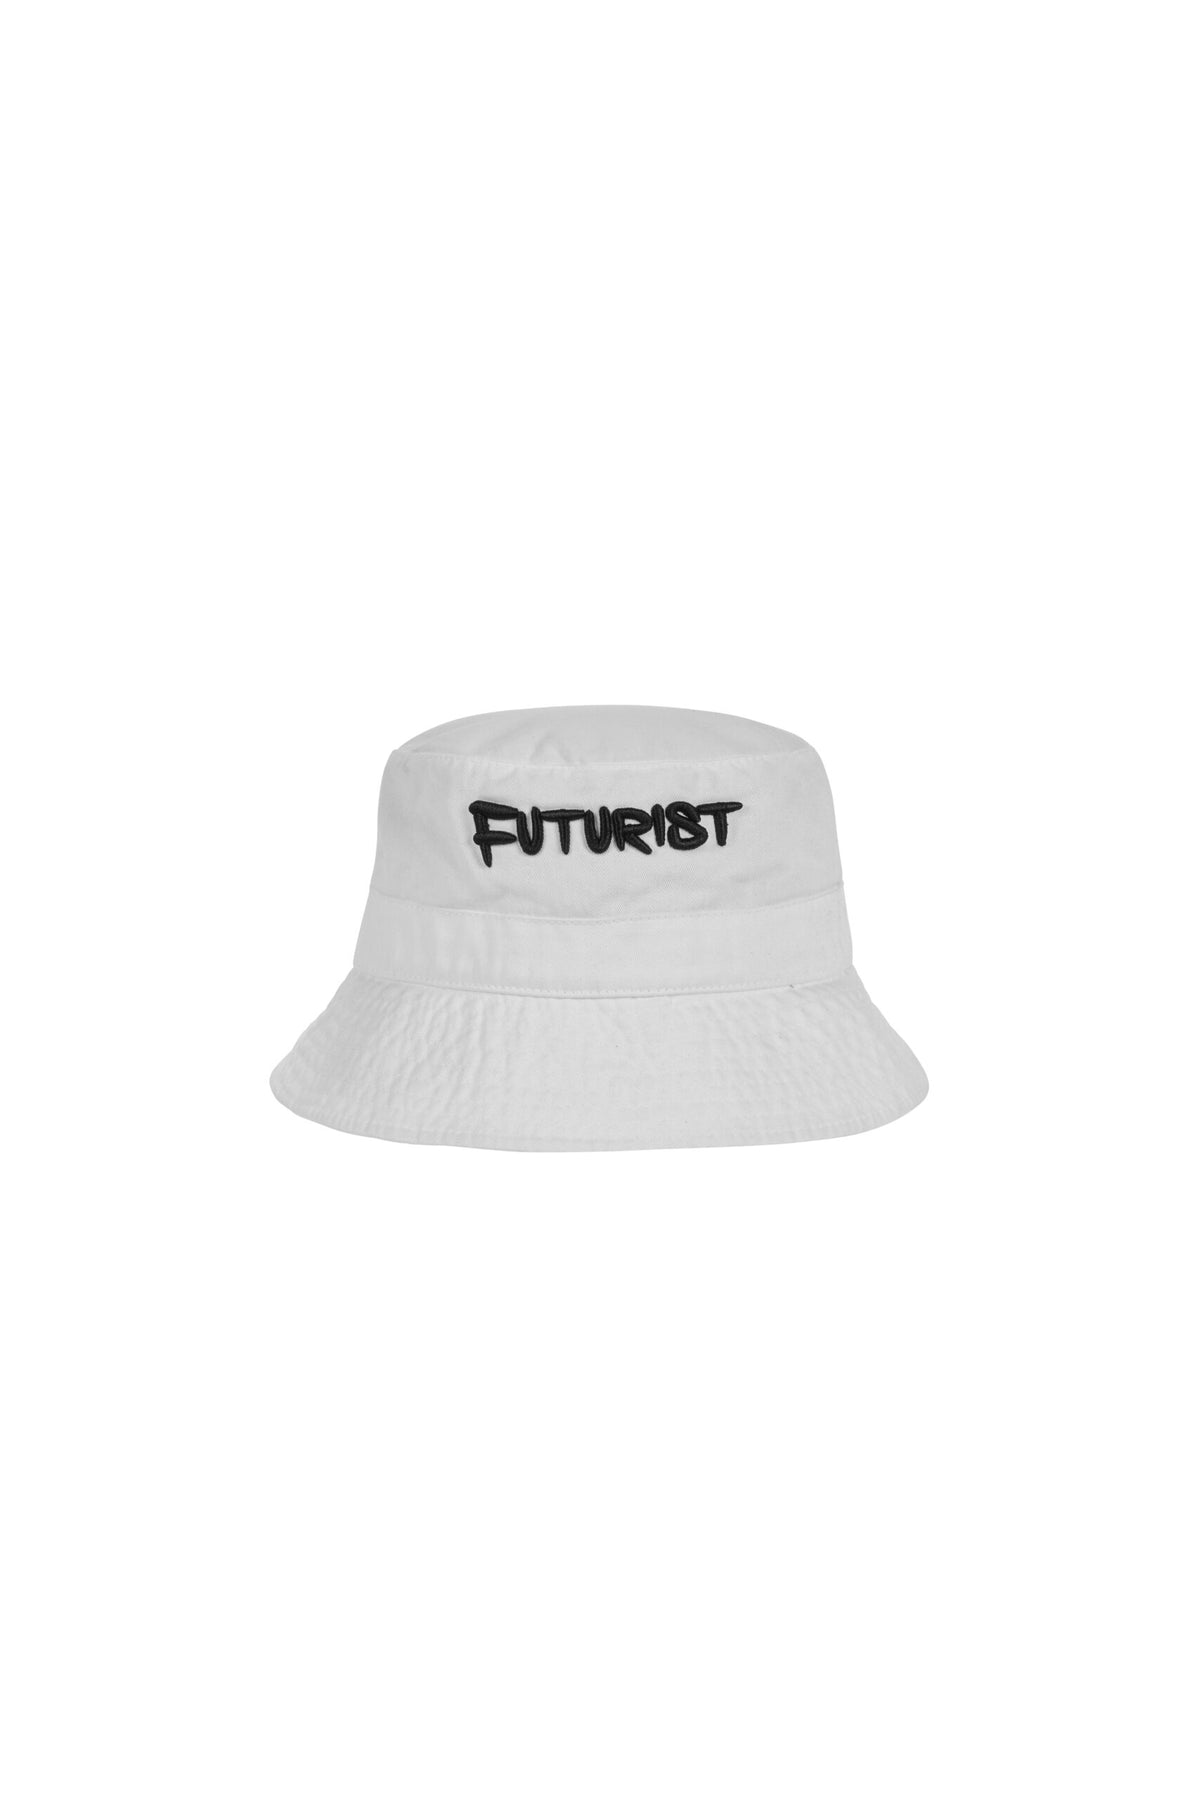 Futurist Bucket Hat